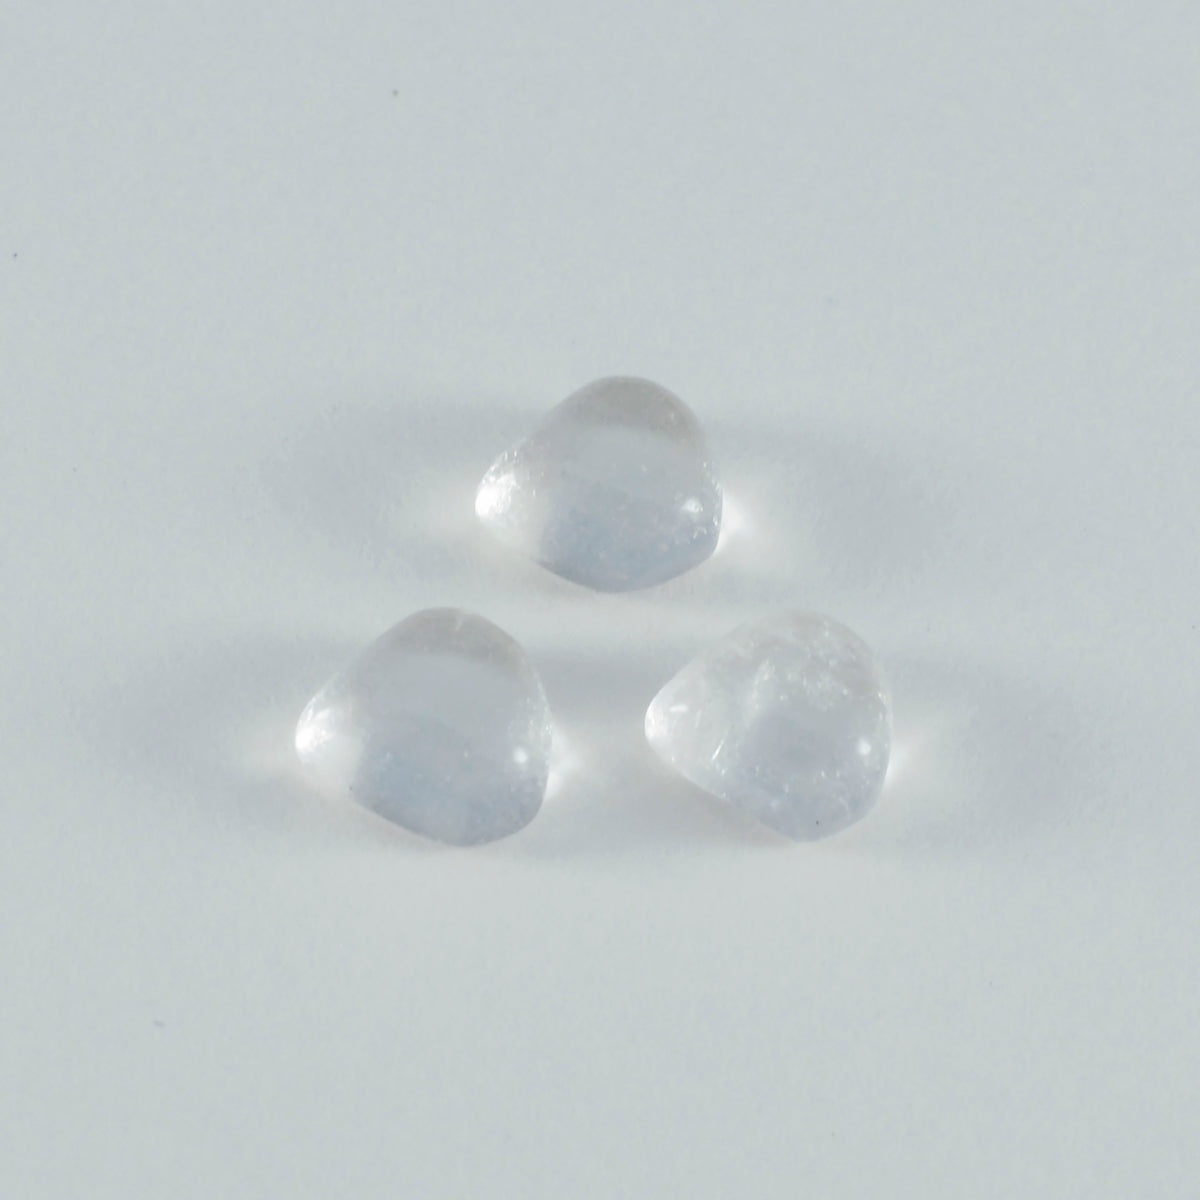 riyogems 1шт кабошон из белого кристалла кварца 14x14 мм в форме сердца A + 1 драгоценный камень качества